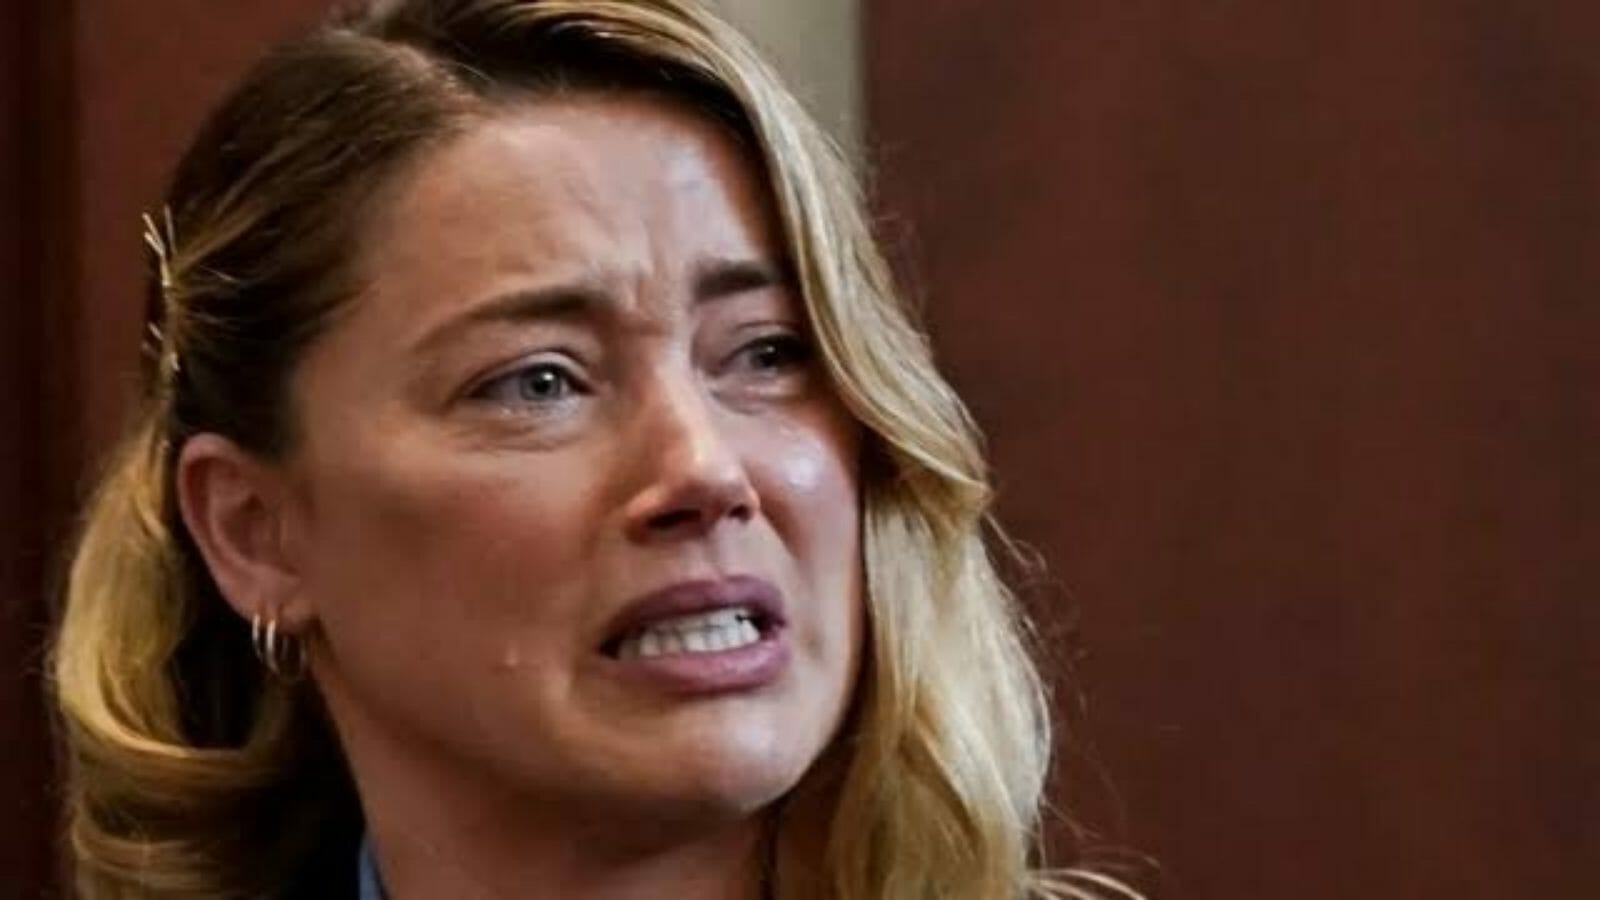 Amber Heard breaks down during Thursday's trial